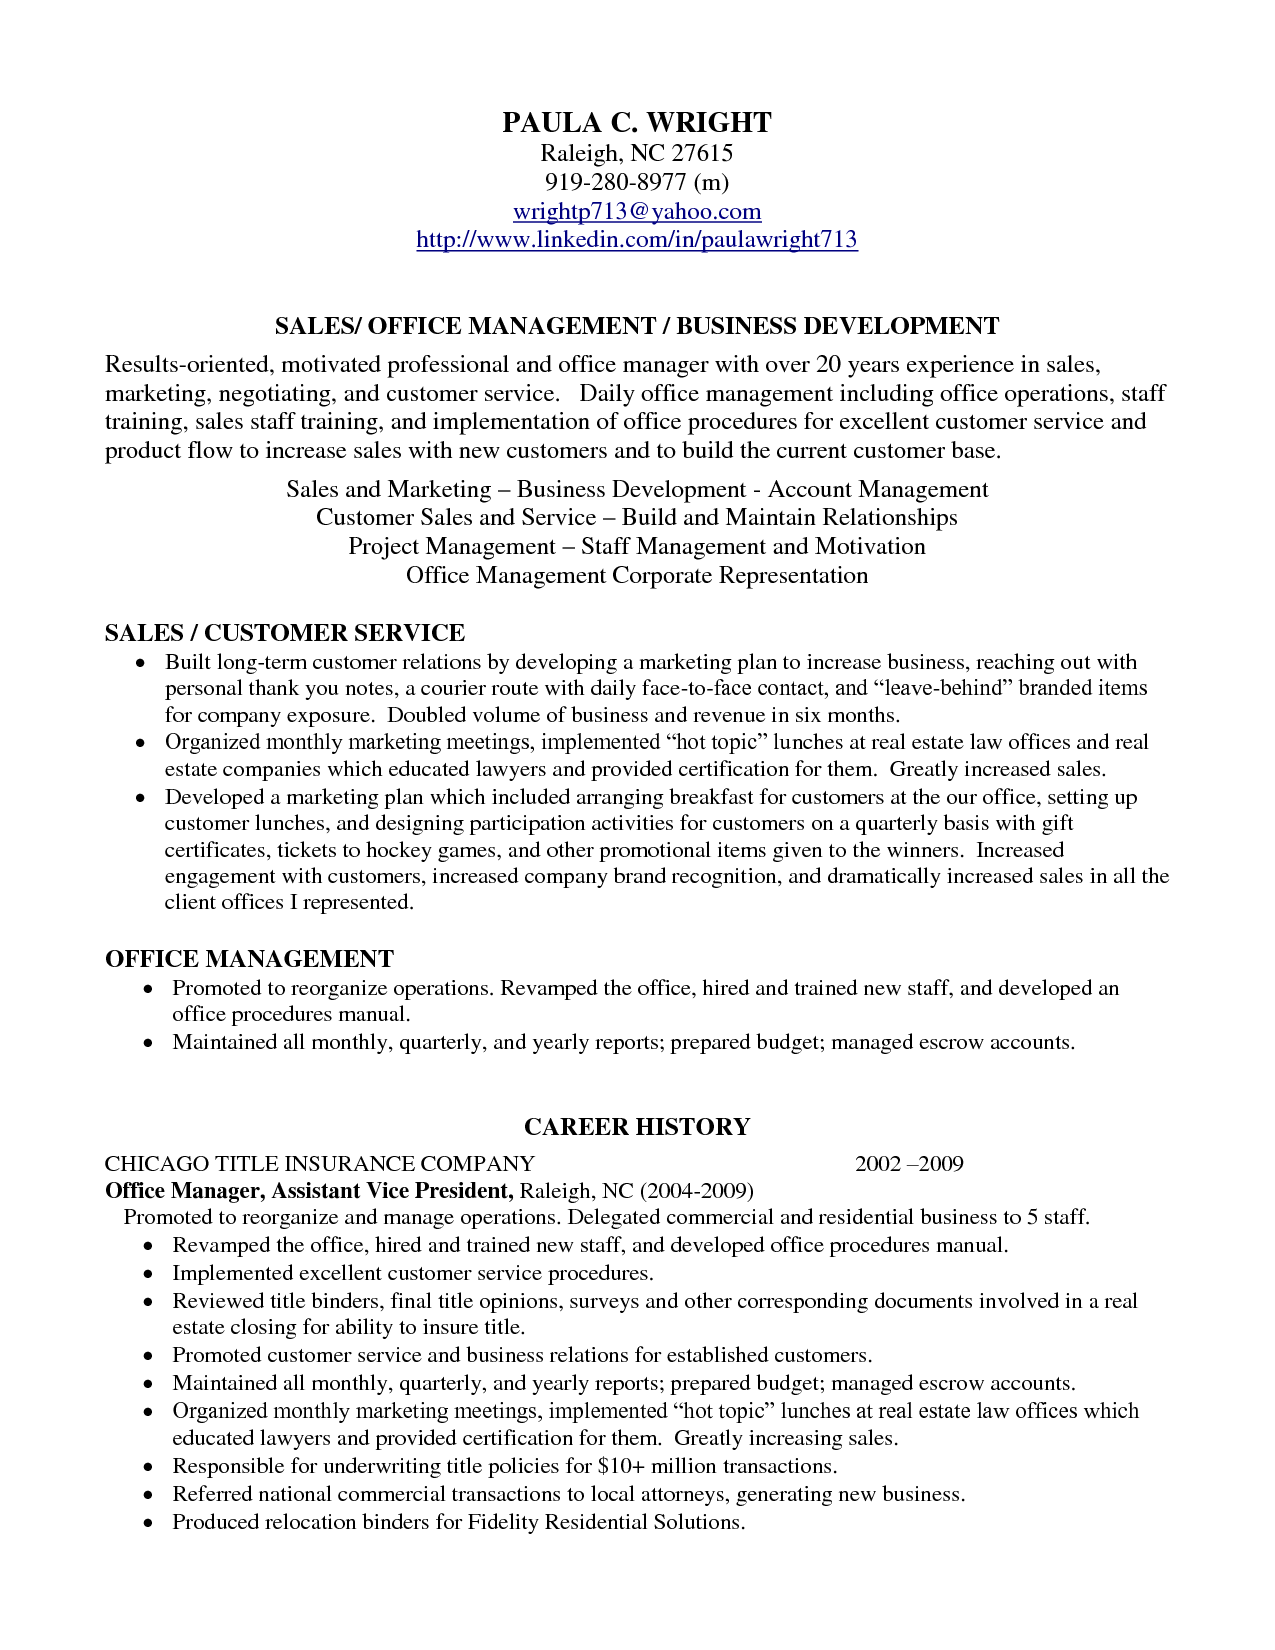 Resume Examples Profile 